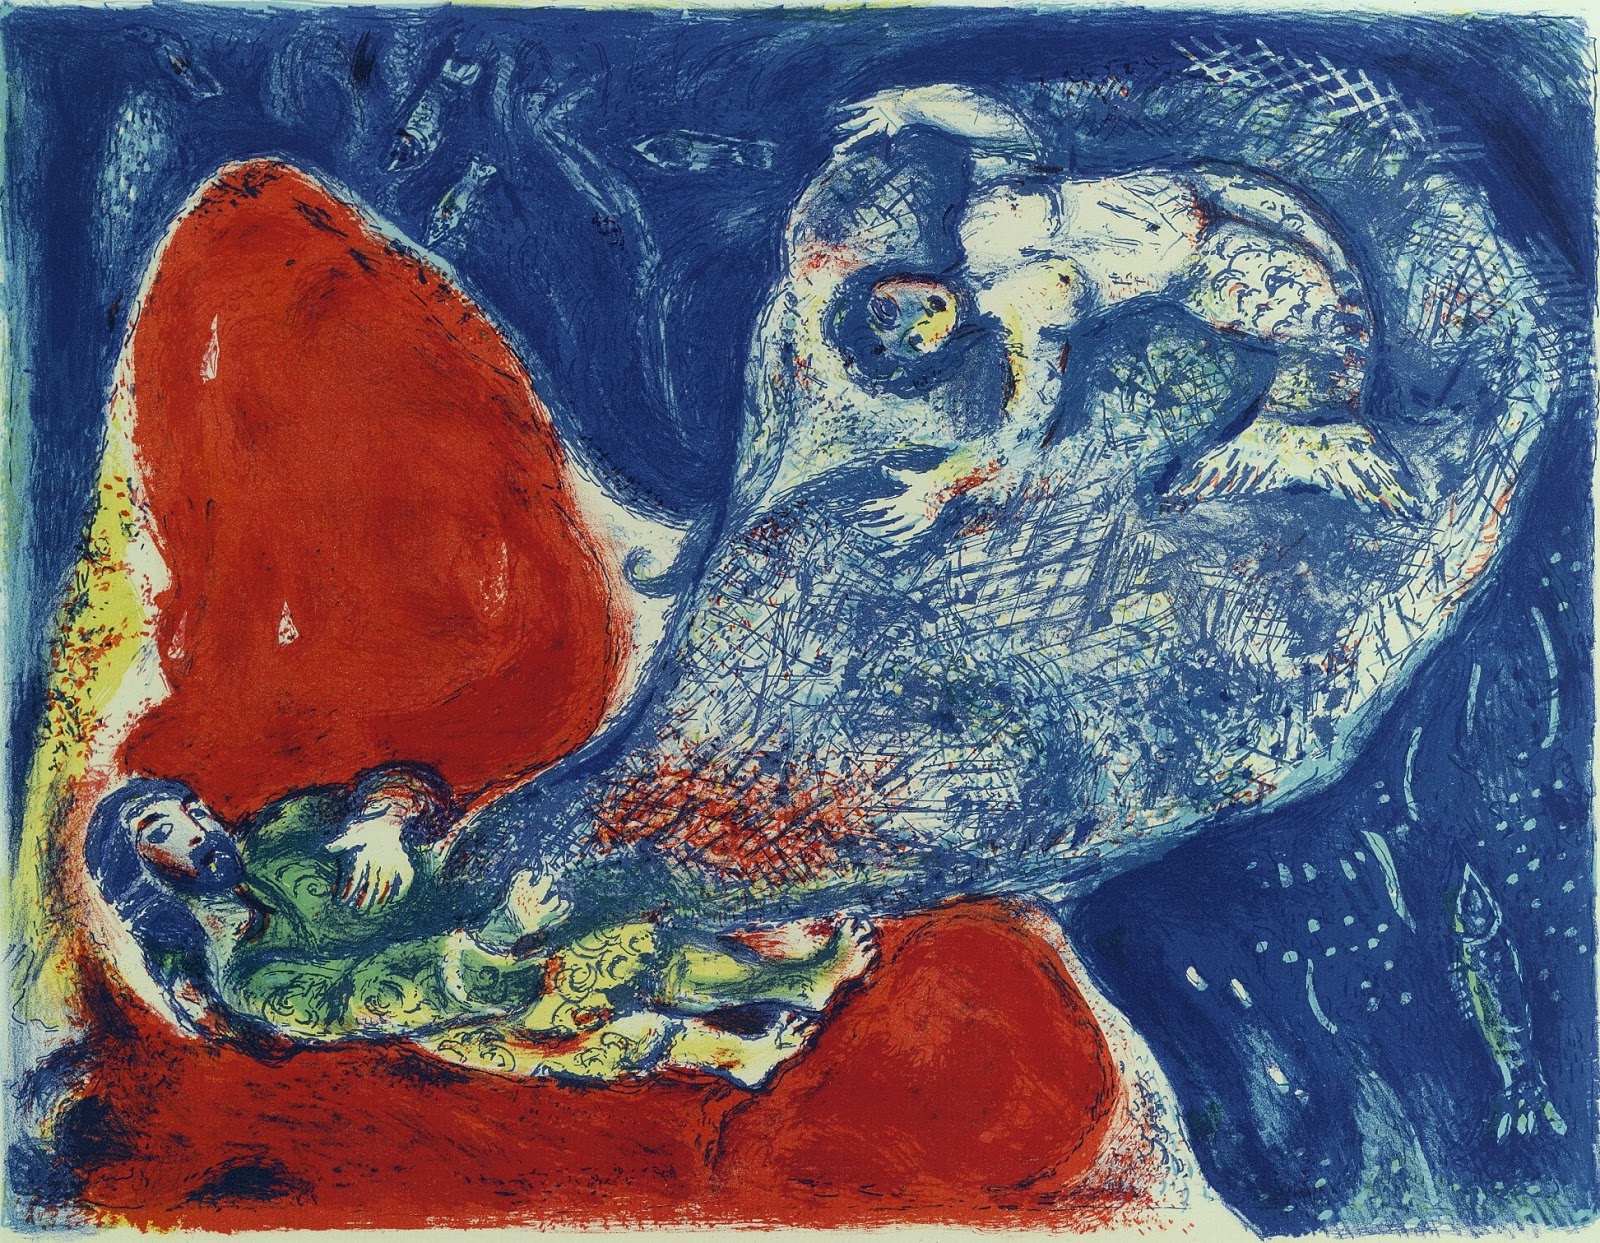 Marc+Chagall-1887-1985 (422).jpg